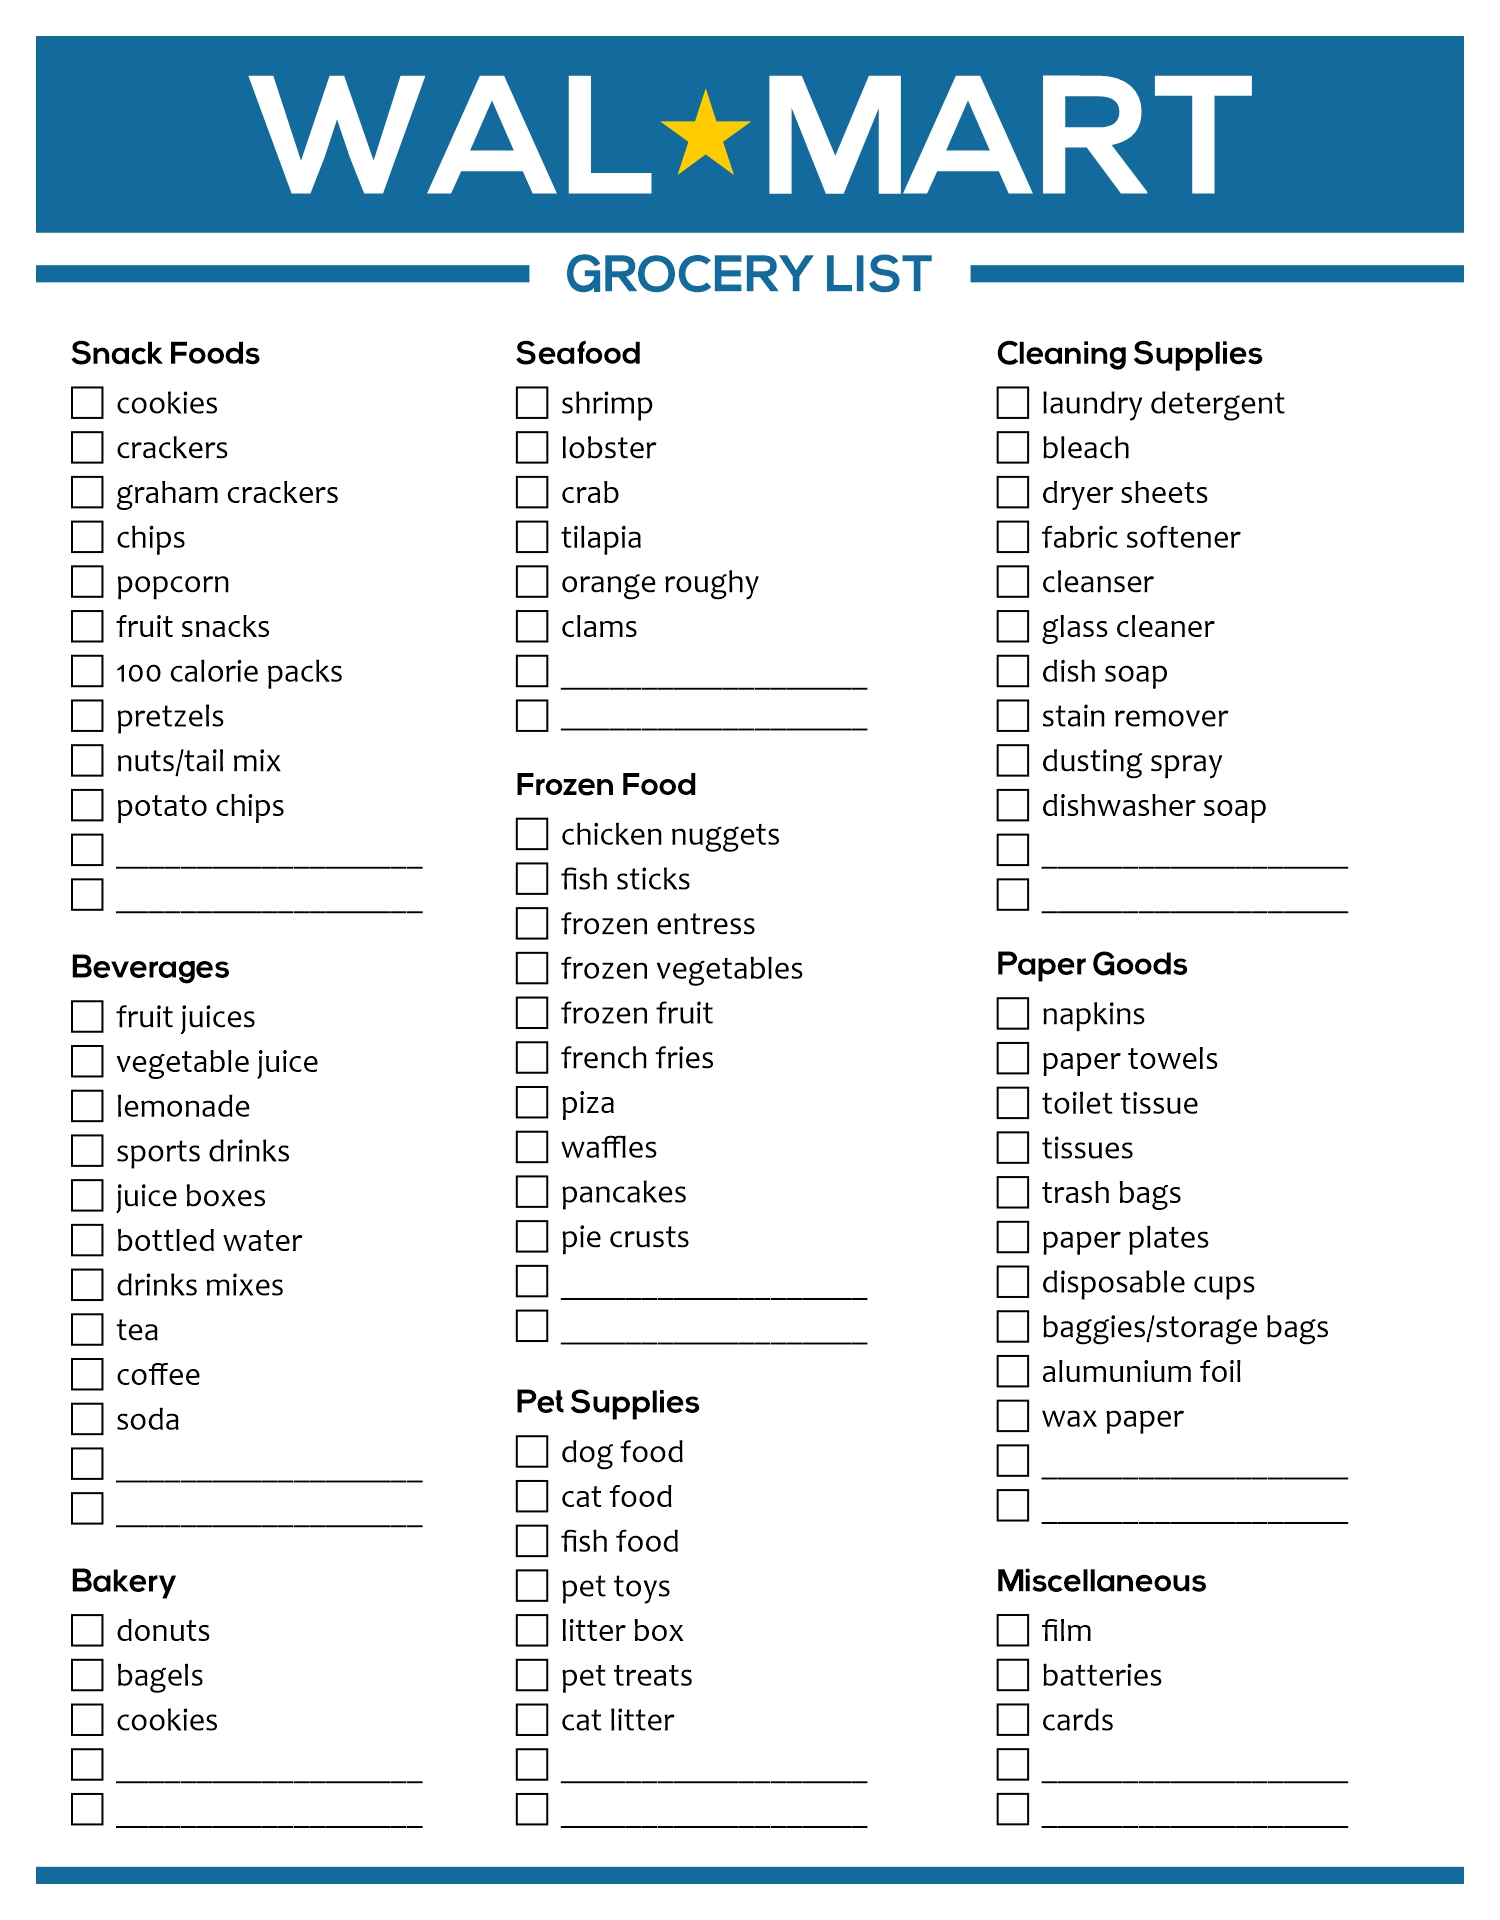 6 Best Images of Walmart Grocery List Printable - Free Printable